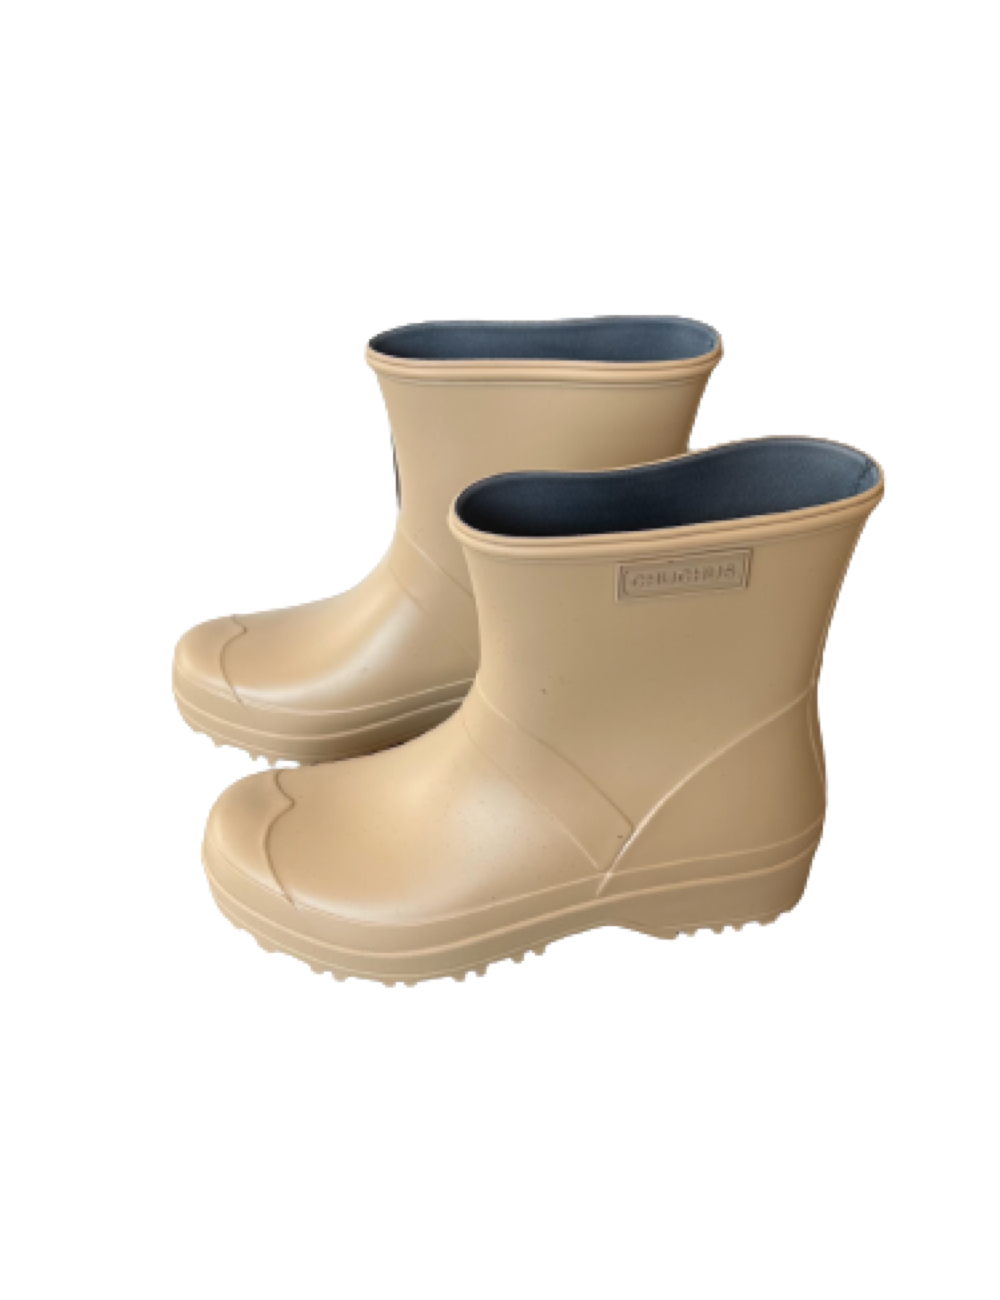 momo rain boots (베이지)